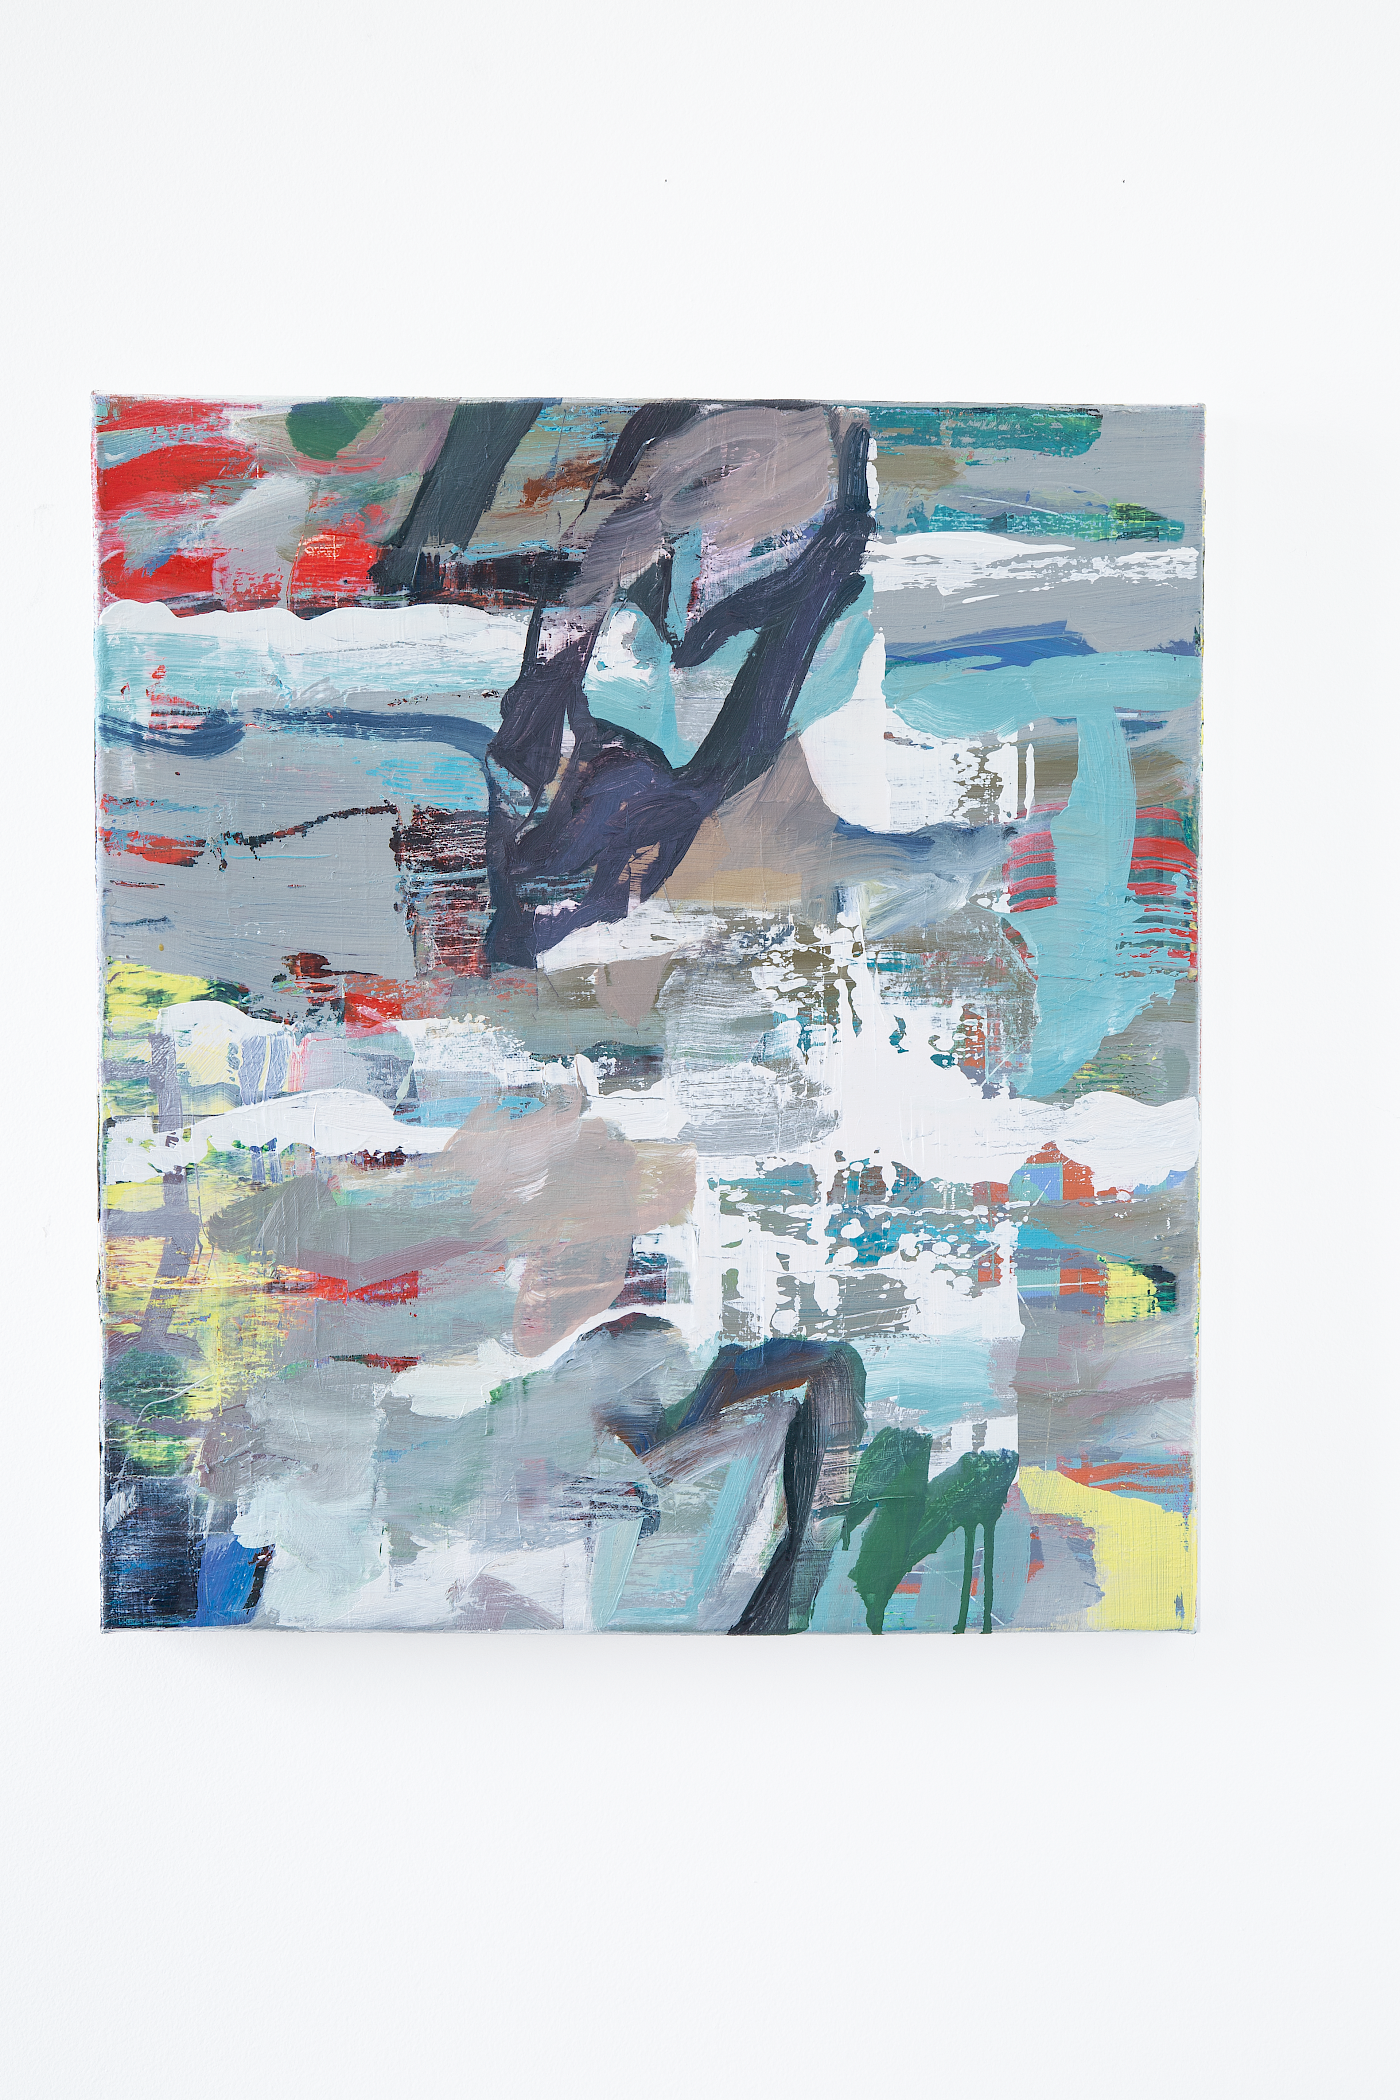 Geweih,  Ölfarbe auf Leinwand, 48 x 43 cm, 2020/21